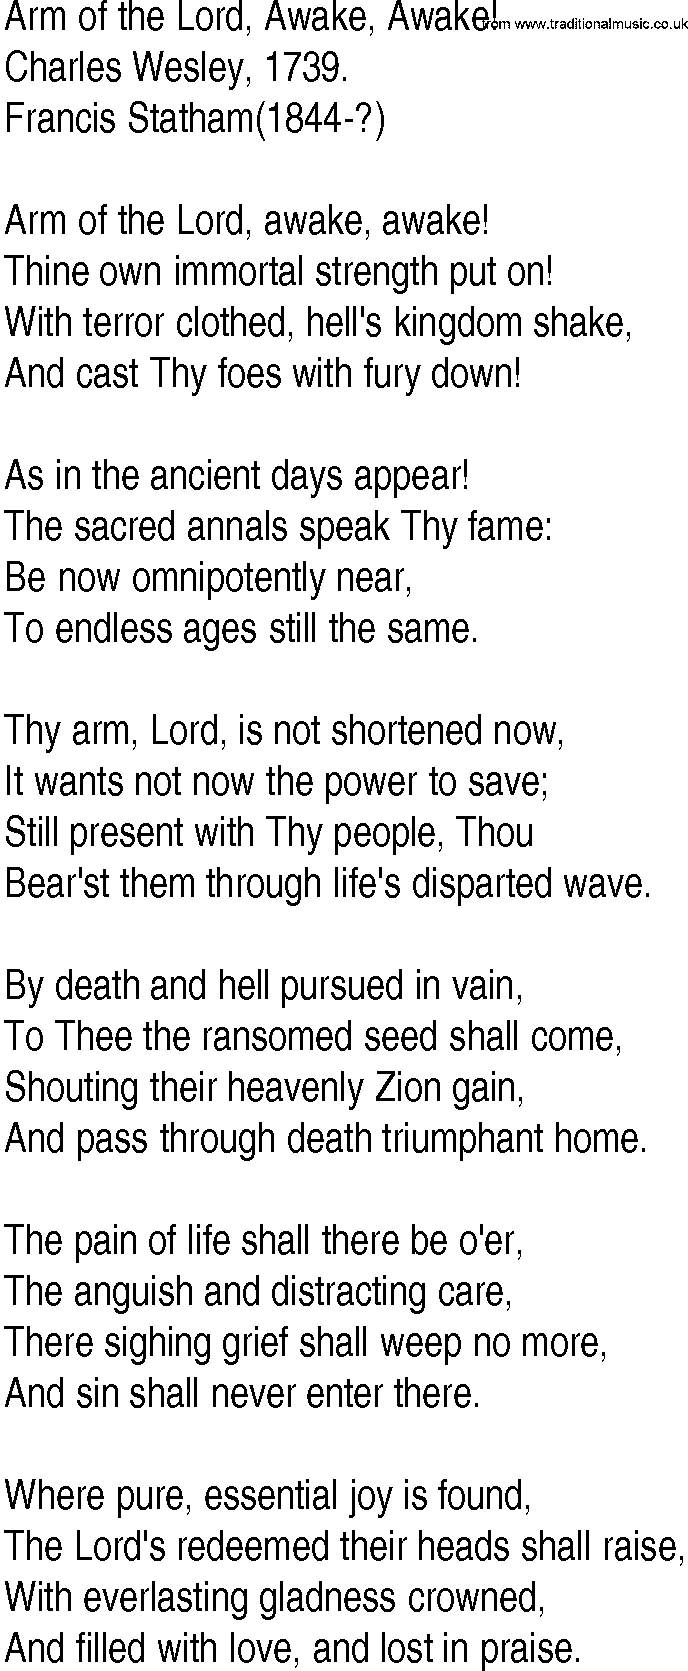 Hymn and Gospel Song: Arm of the Lord, Awake, Awake! by Charles Wesley lyrics